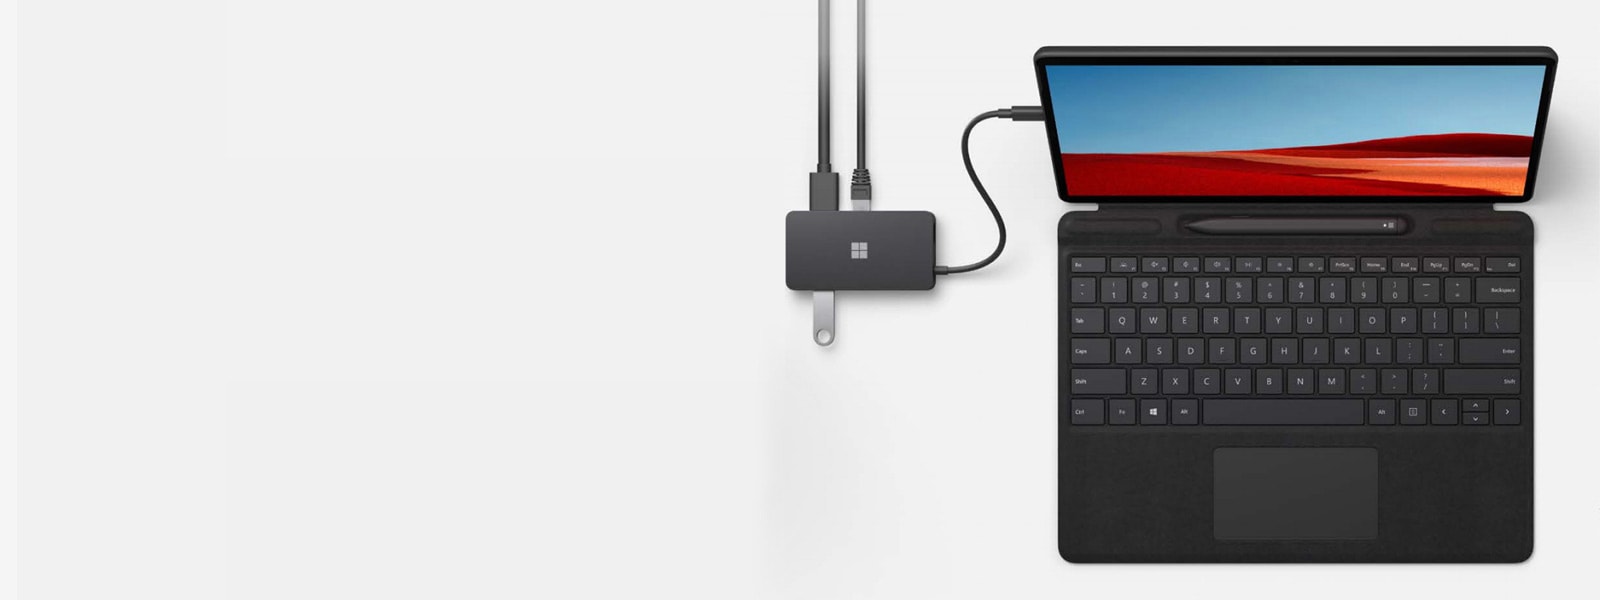 جهاز Microsoft USB-C® Travel Hub موضوع على مكتب ومتصل بجهاز Surface